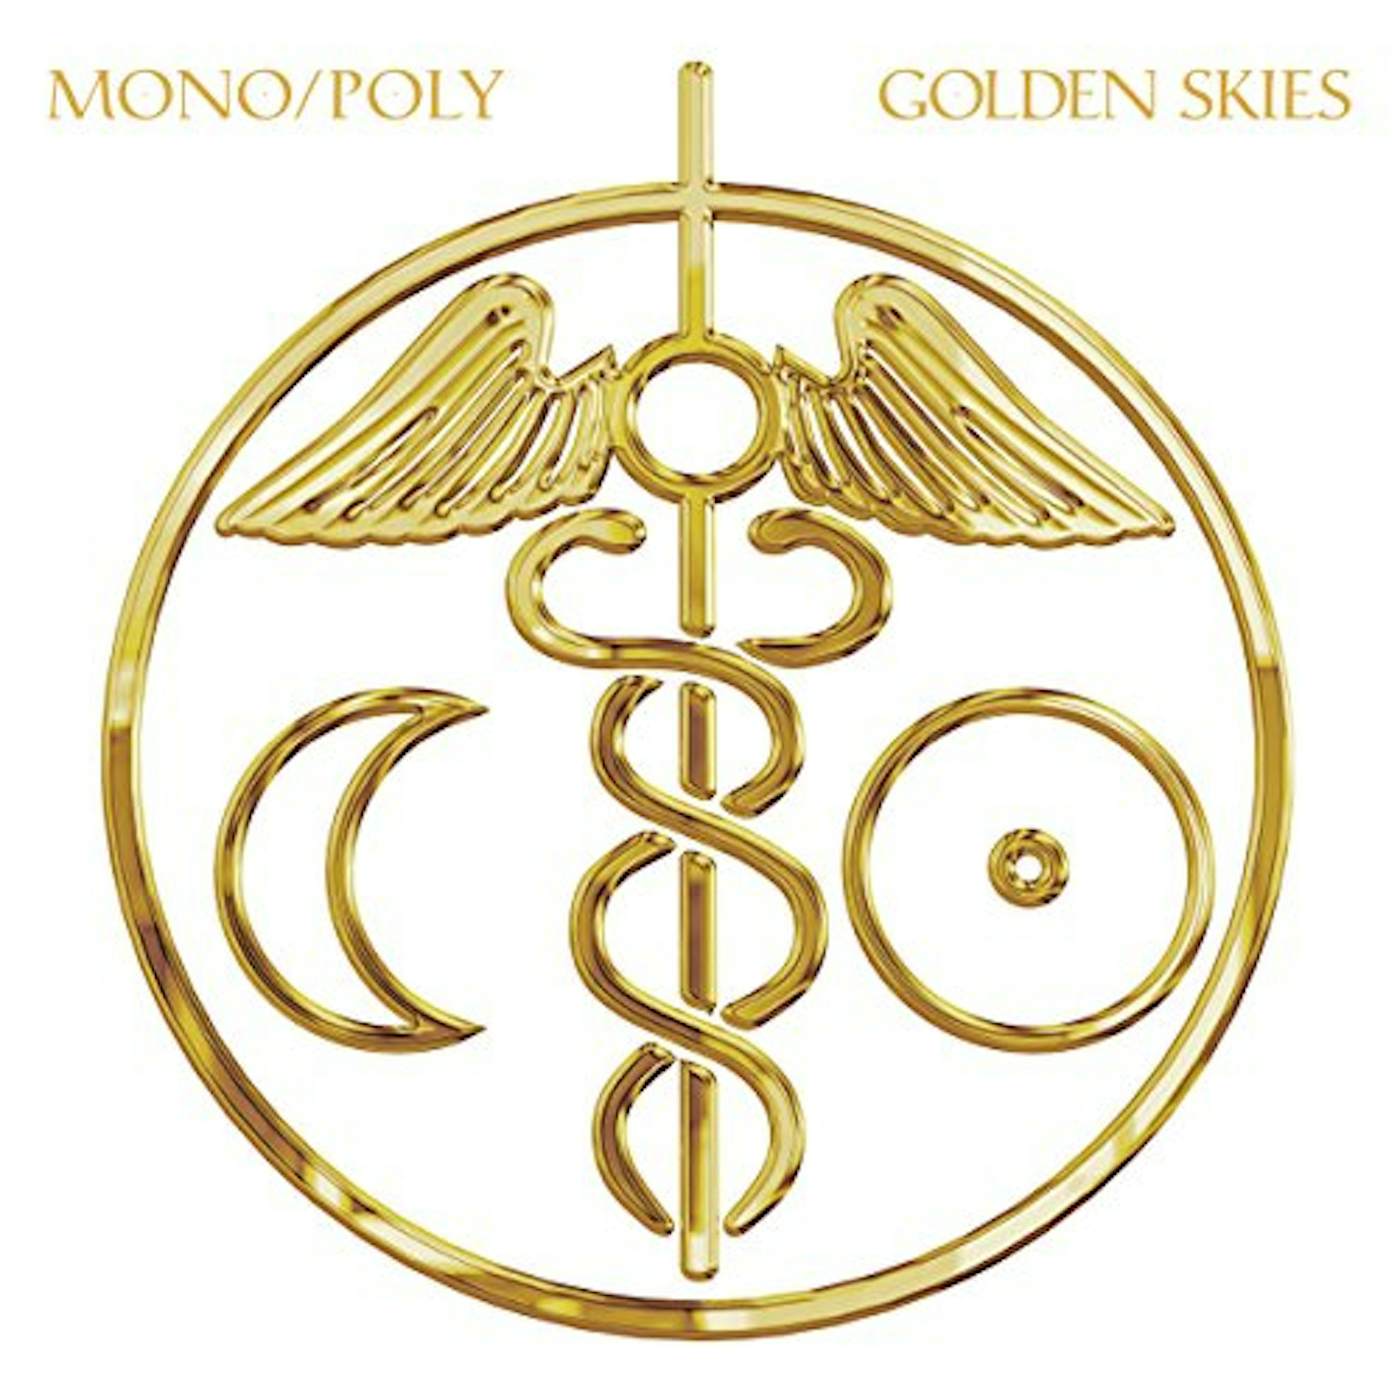 Mono/Poly GOLDEN SKIES CD